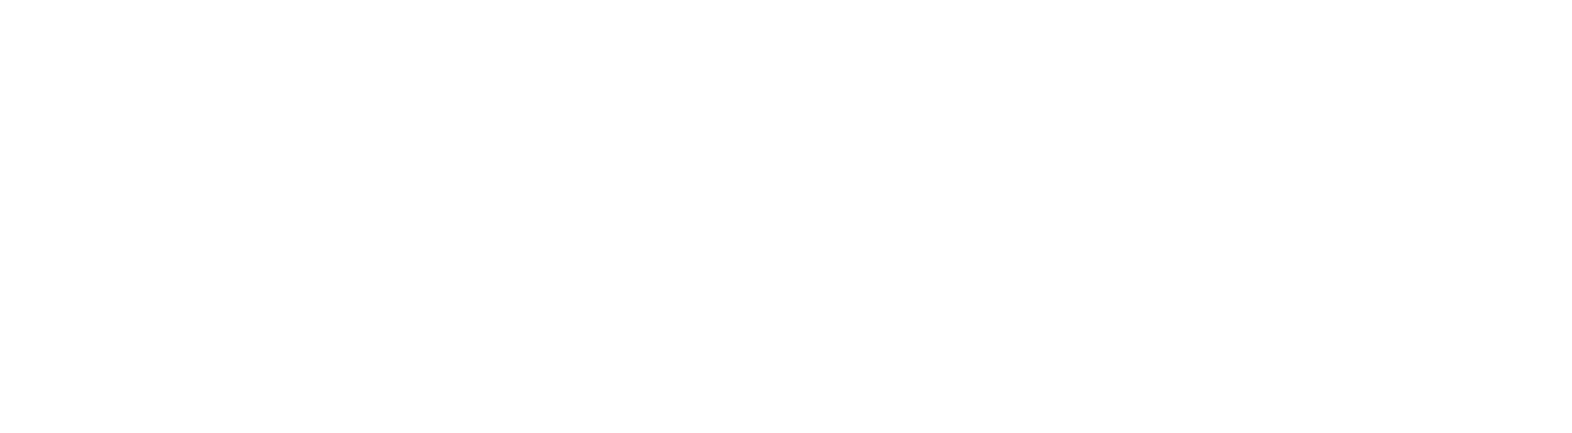 TESSCO Technologies logo large for dark backgrounds (transparent PNG)